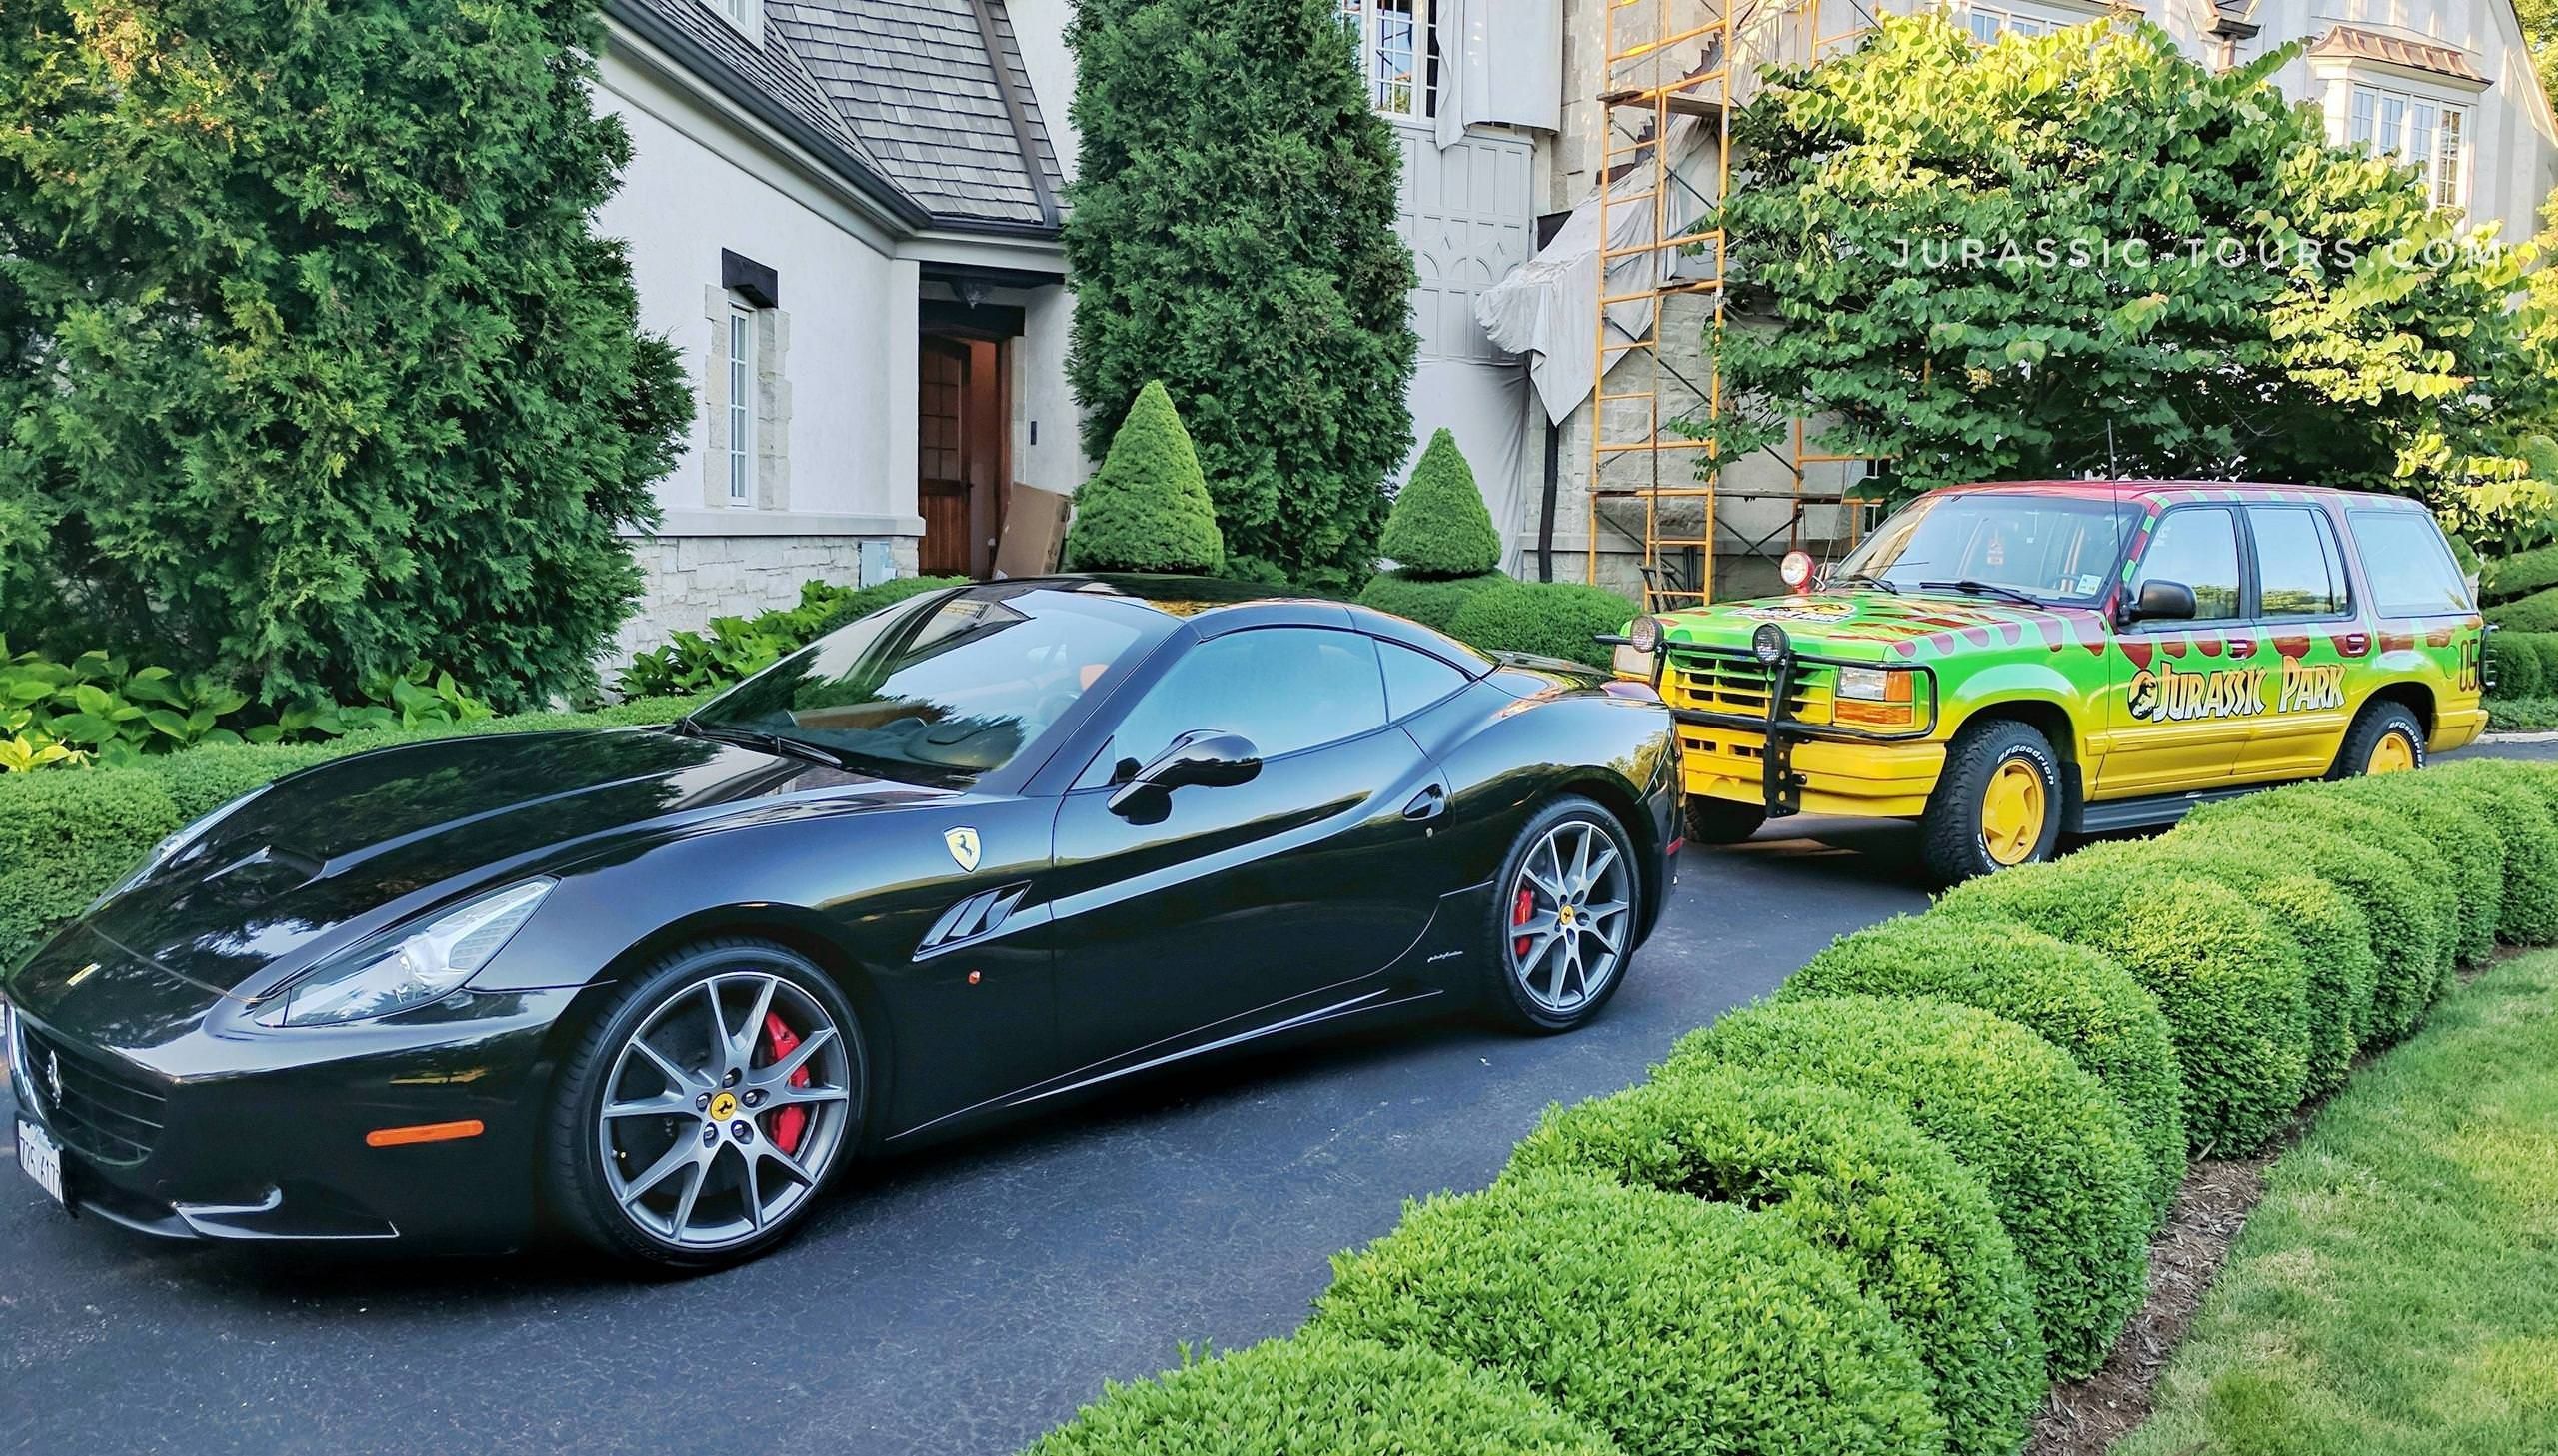 Everyone's dream car. Oh yeah and a Ferrari is here too.